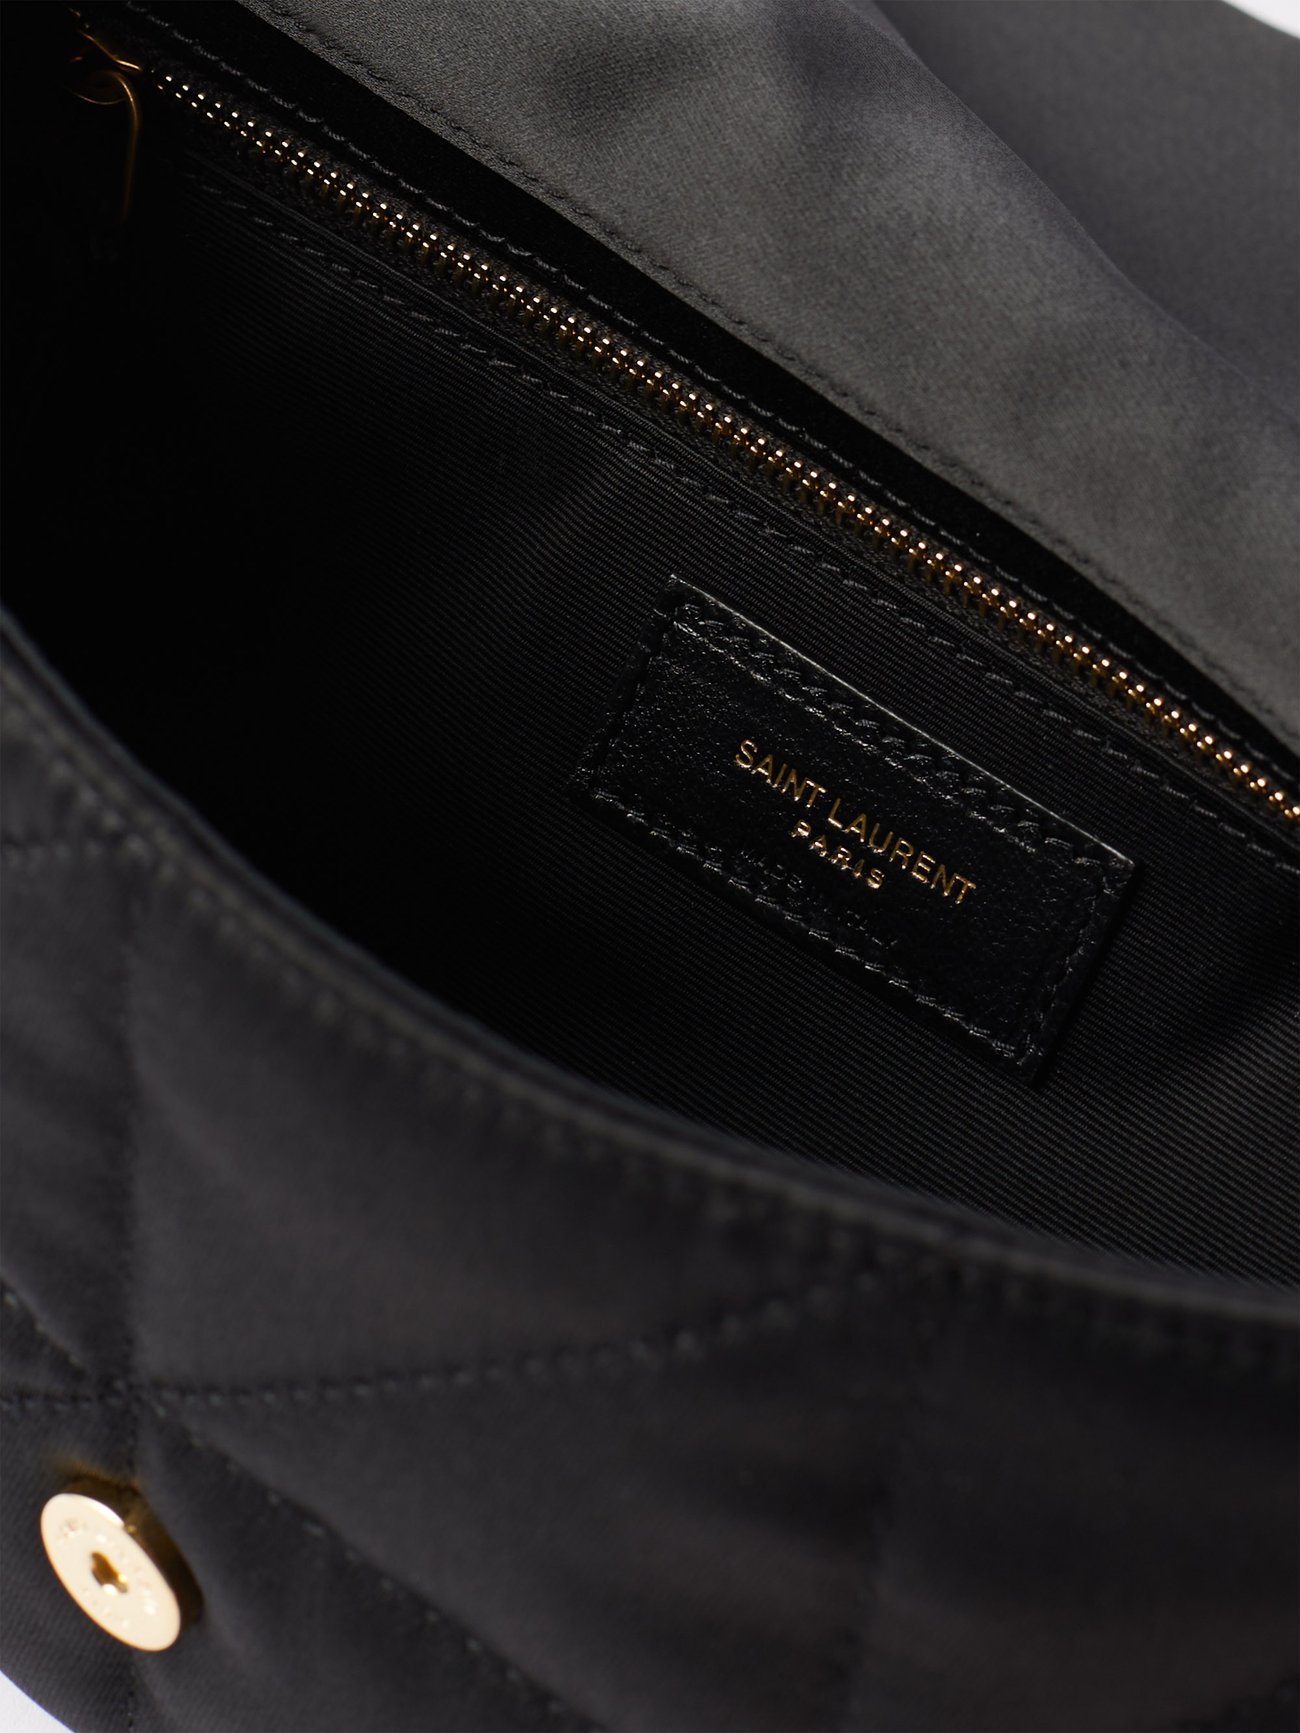 Jamie 4.3 Patchwork Faux Patent Leather Shoulder Bag